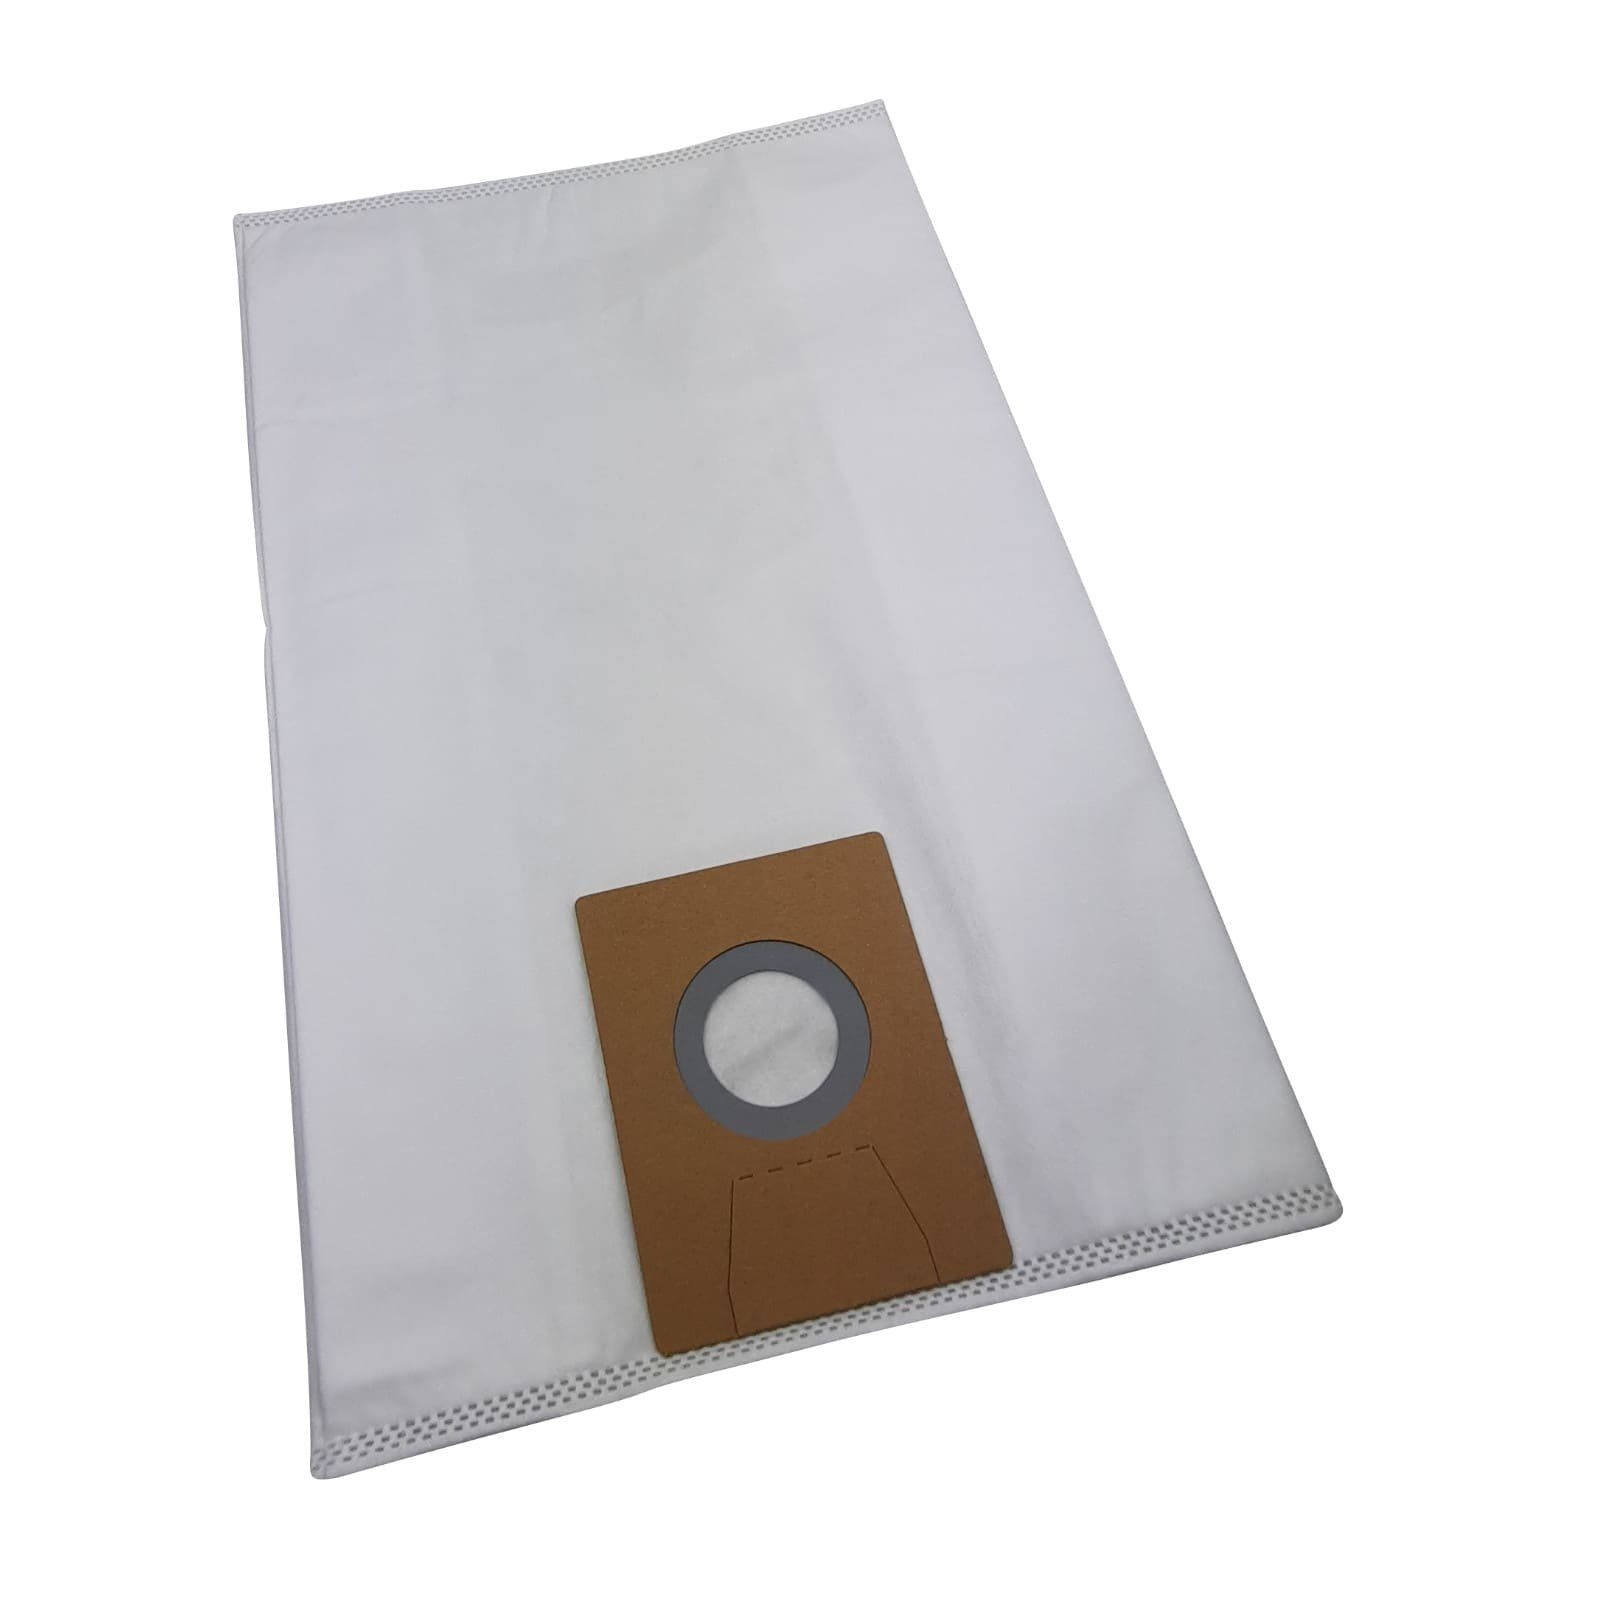 Reinica Saugerbeutel Staubbeutel Card 10er-Pack K103200942, a Clean für passend Staubsaugerbeutel Filtertüten la Beutel